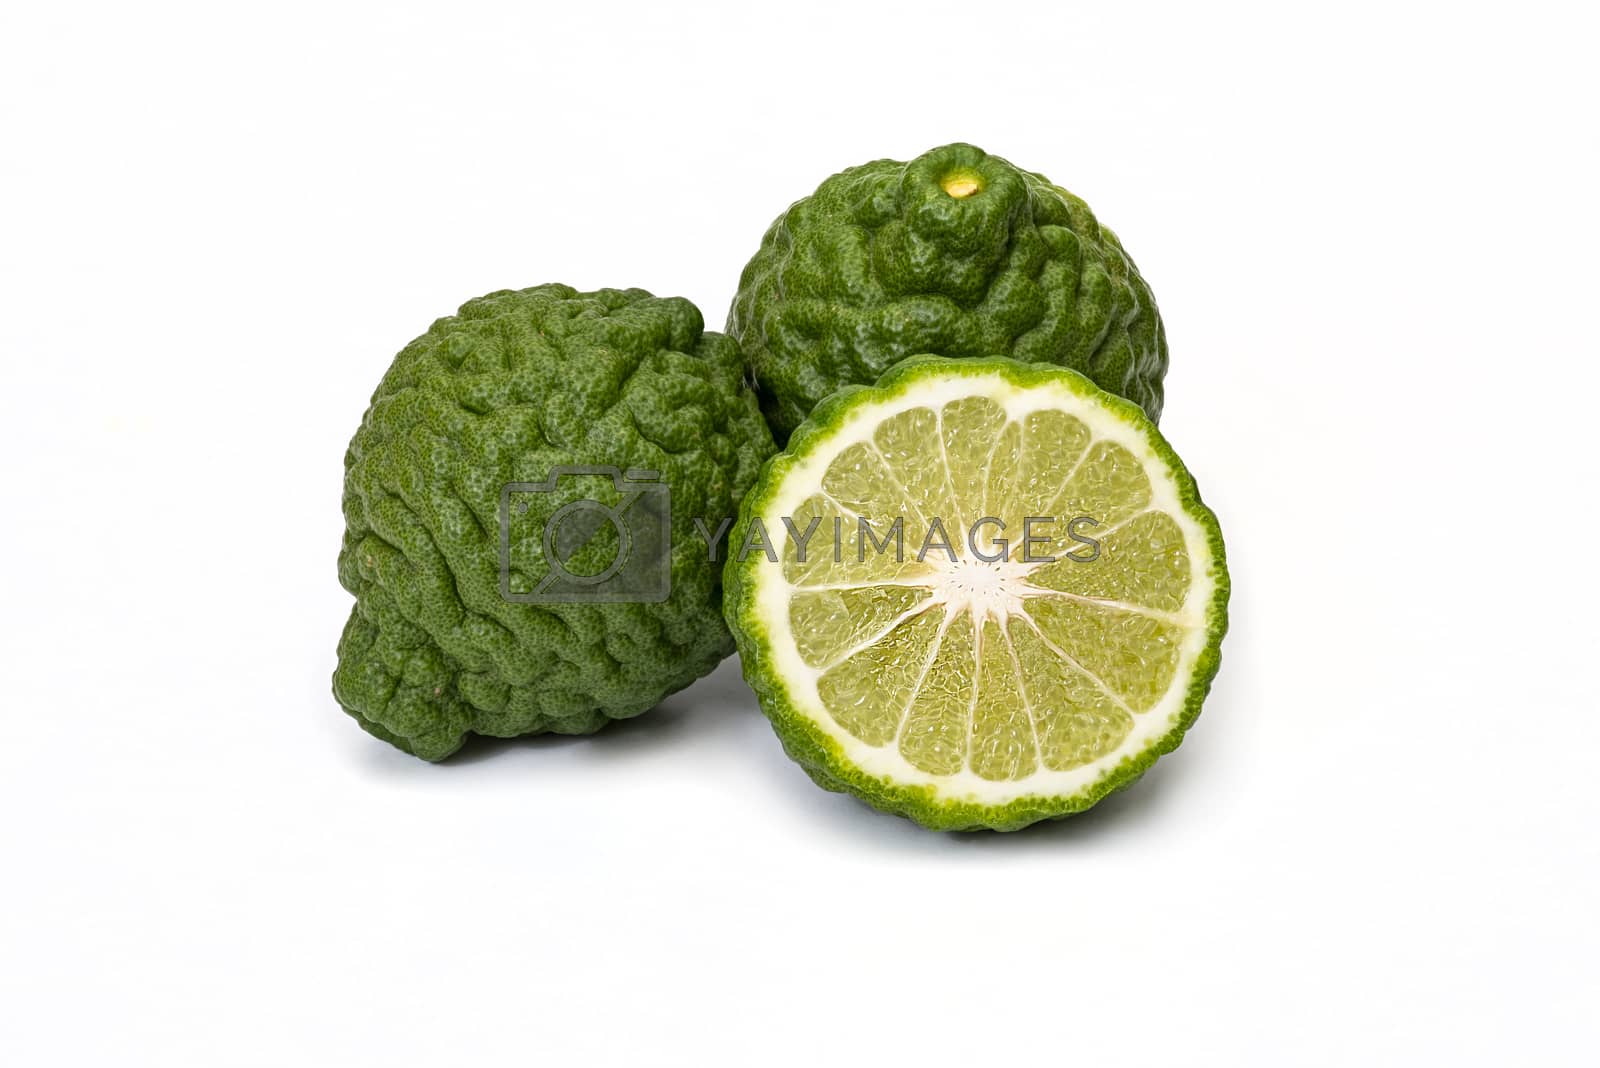 Royalty free image of Bergamot fruit kaffir limes on a white background
 by praethip